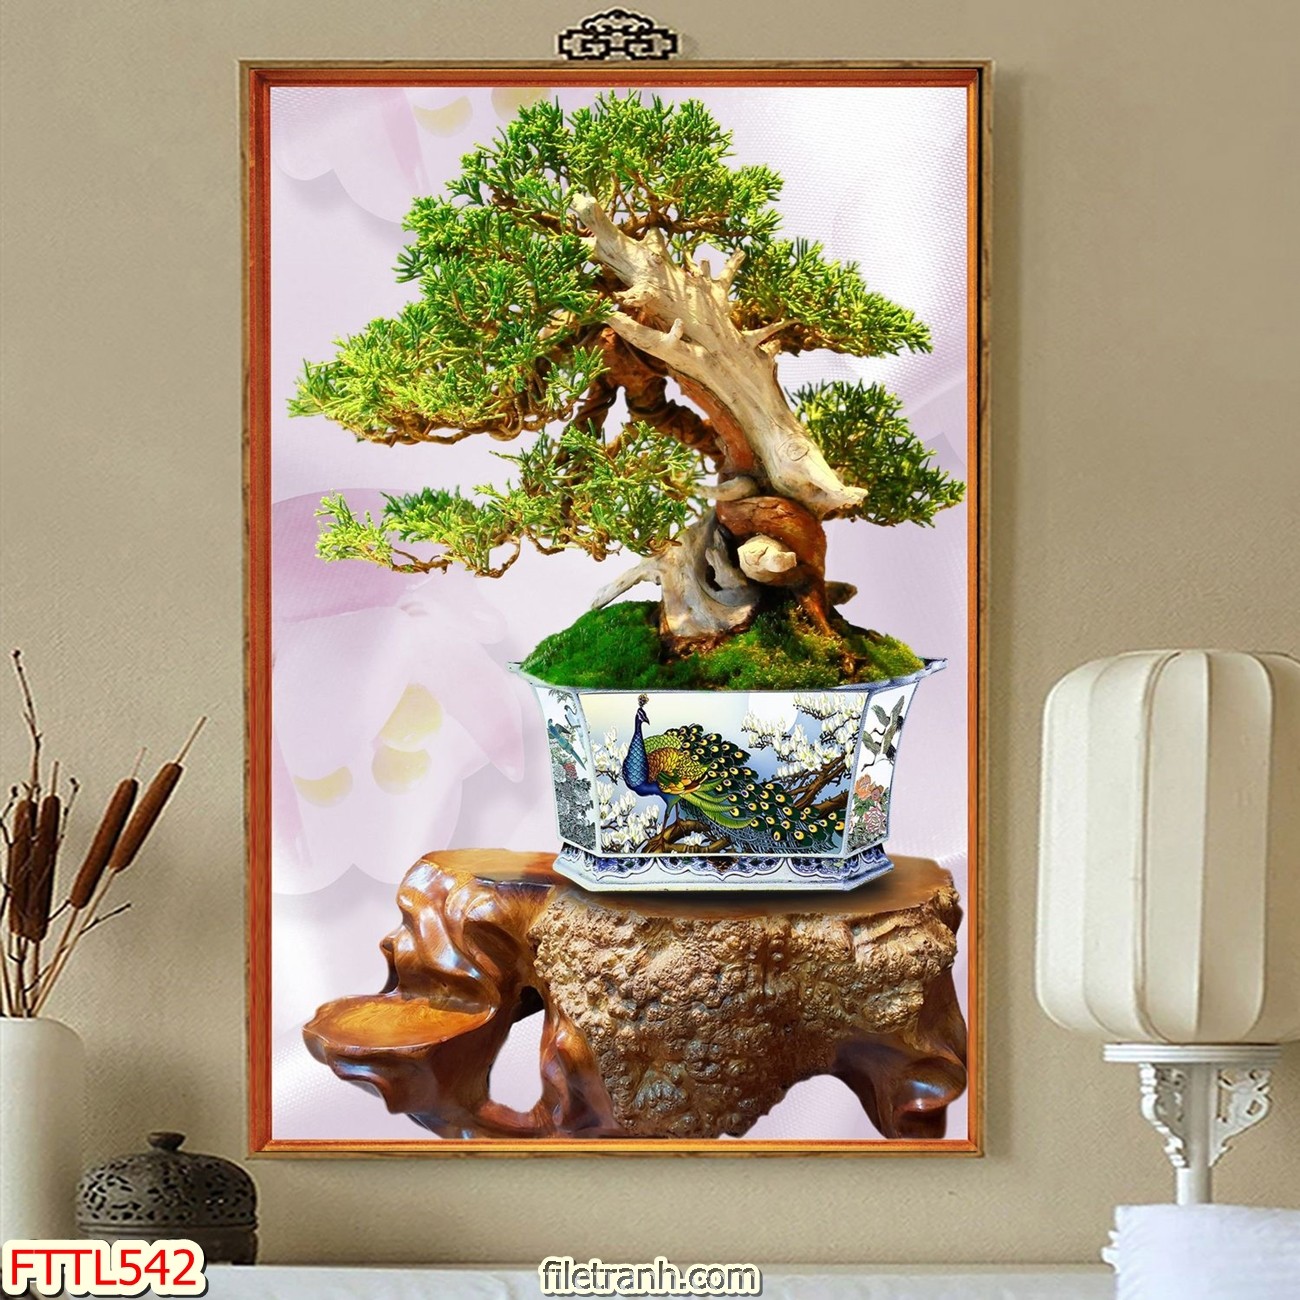 https://filetranh.com/file-tranh-chau-mai-bonsai/file-tranh-chau-mai-bonsai-fttl542.html